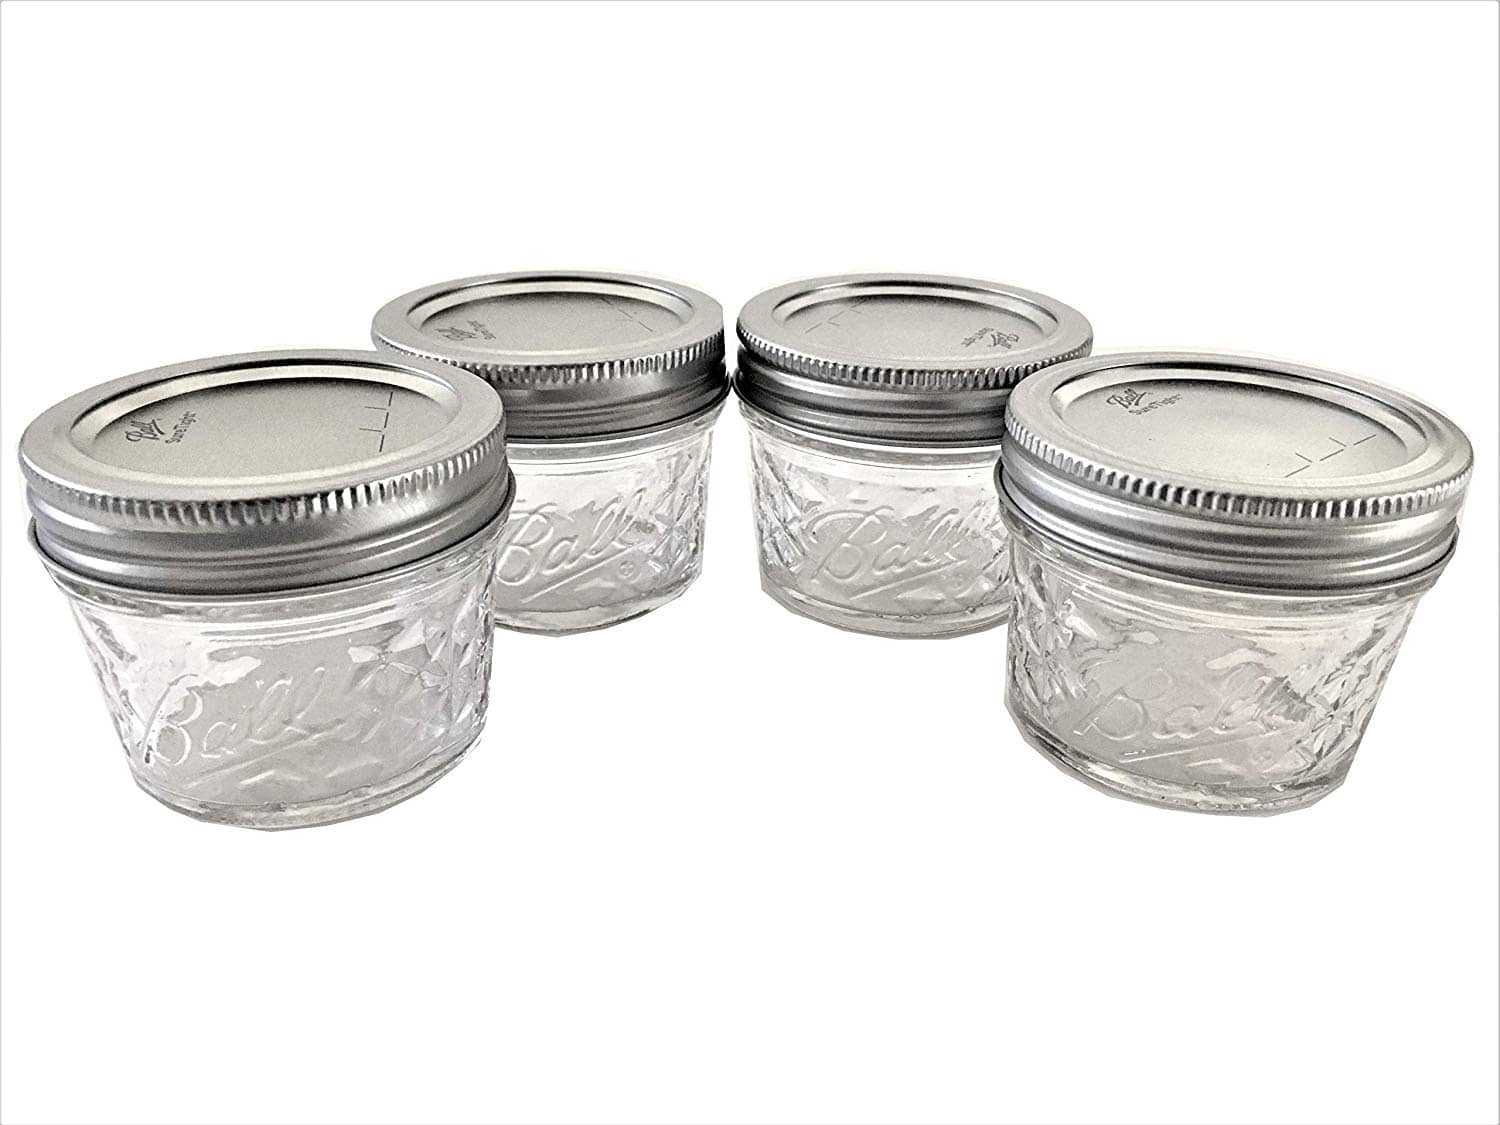 4 oz glass mason jars with metal lids